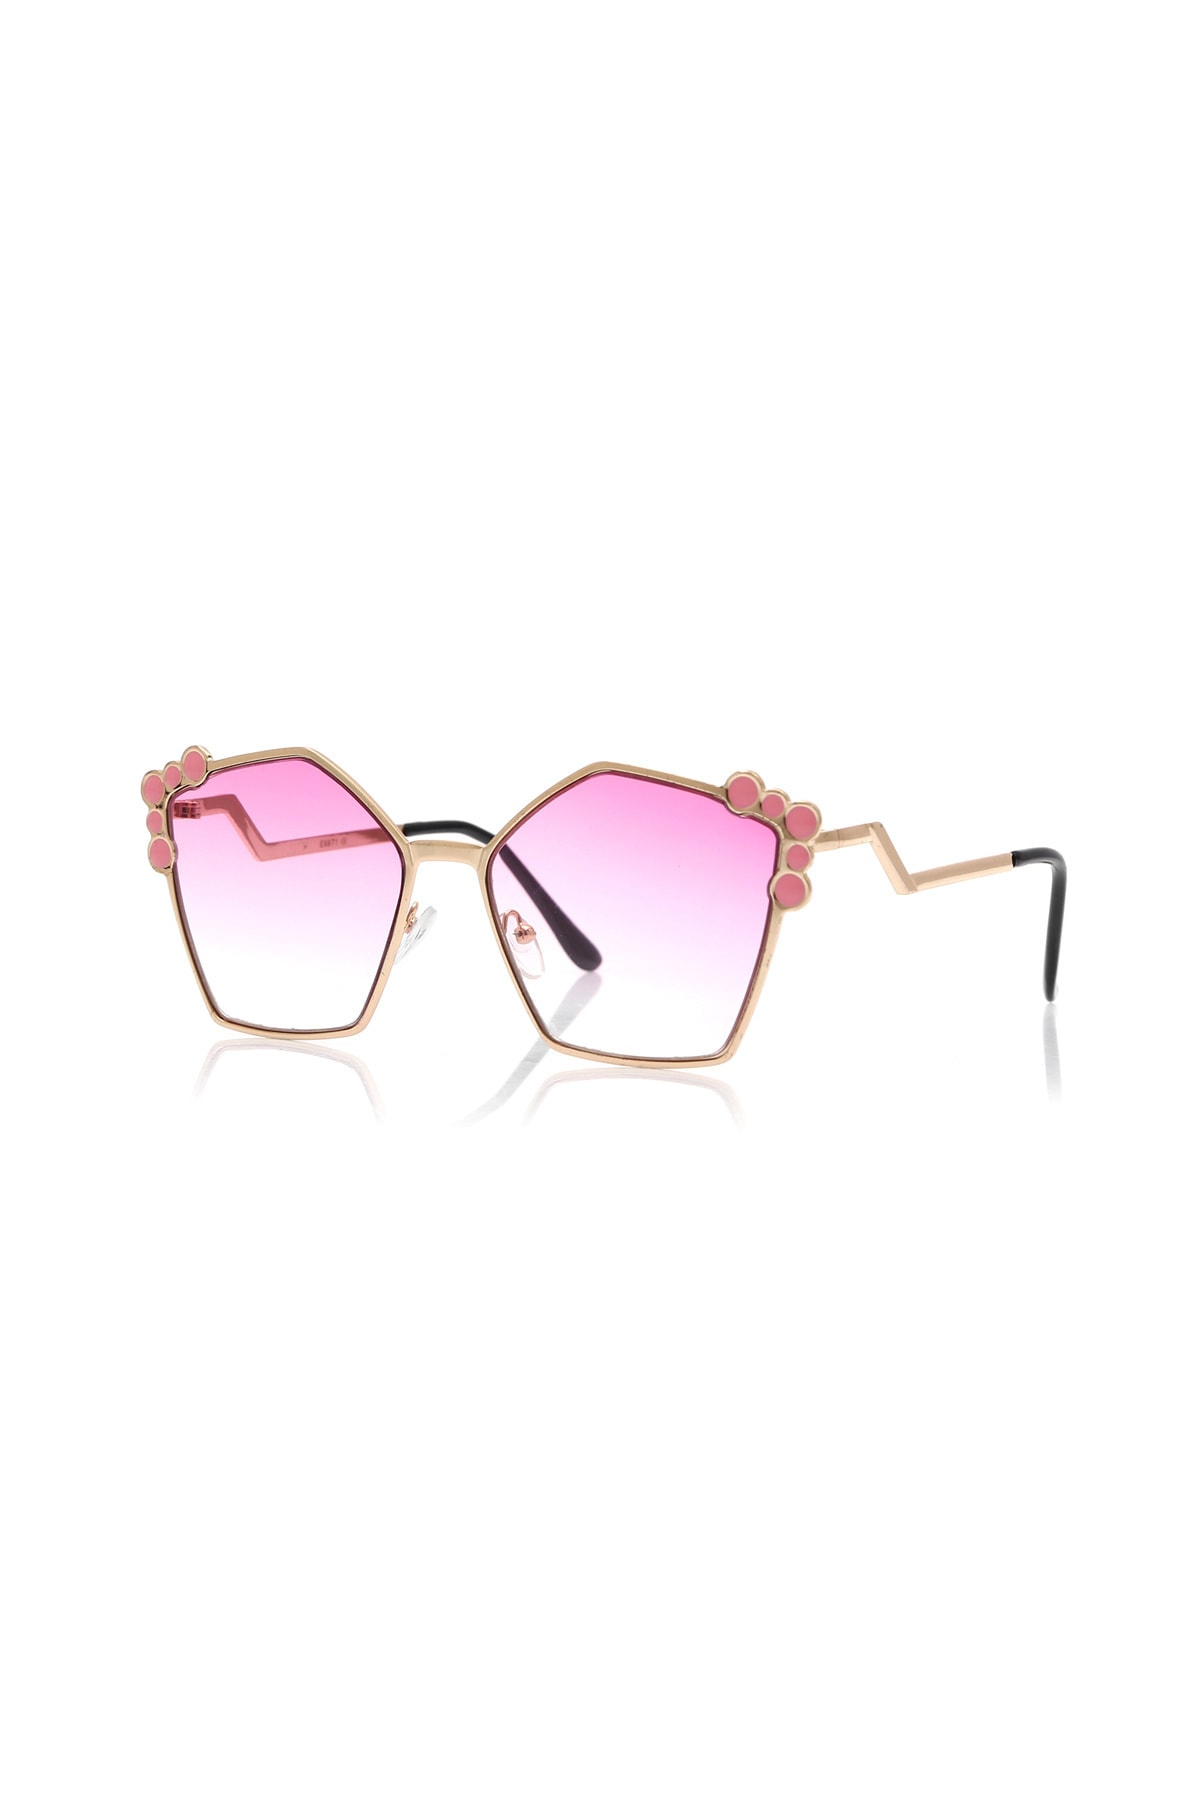 Levně By Harmony Bh Ex671 Gold Pink Women's Sunglasse